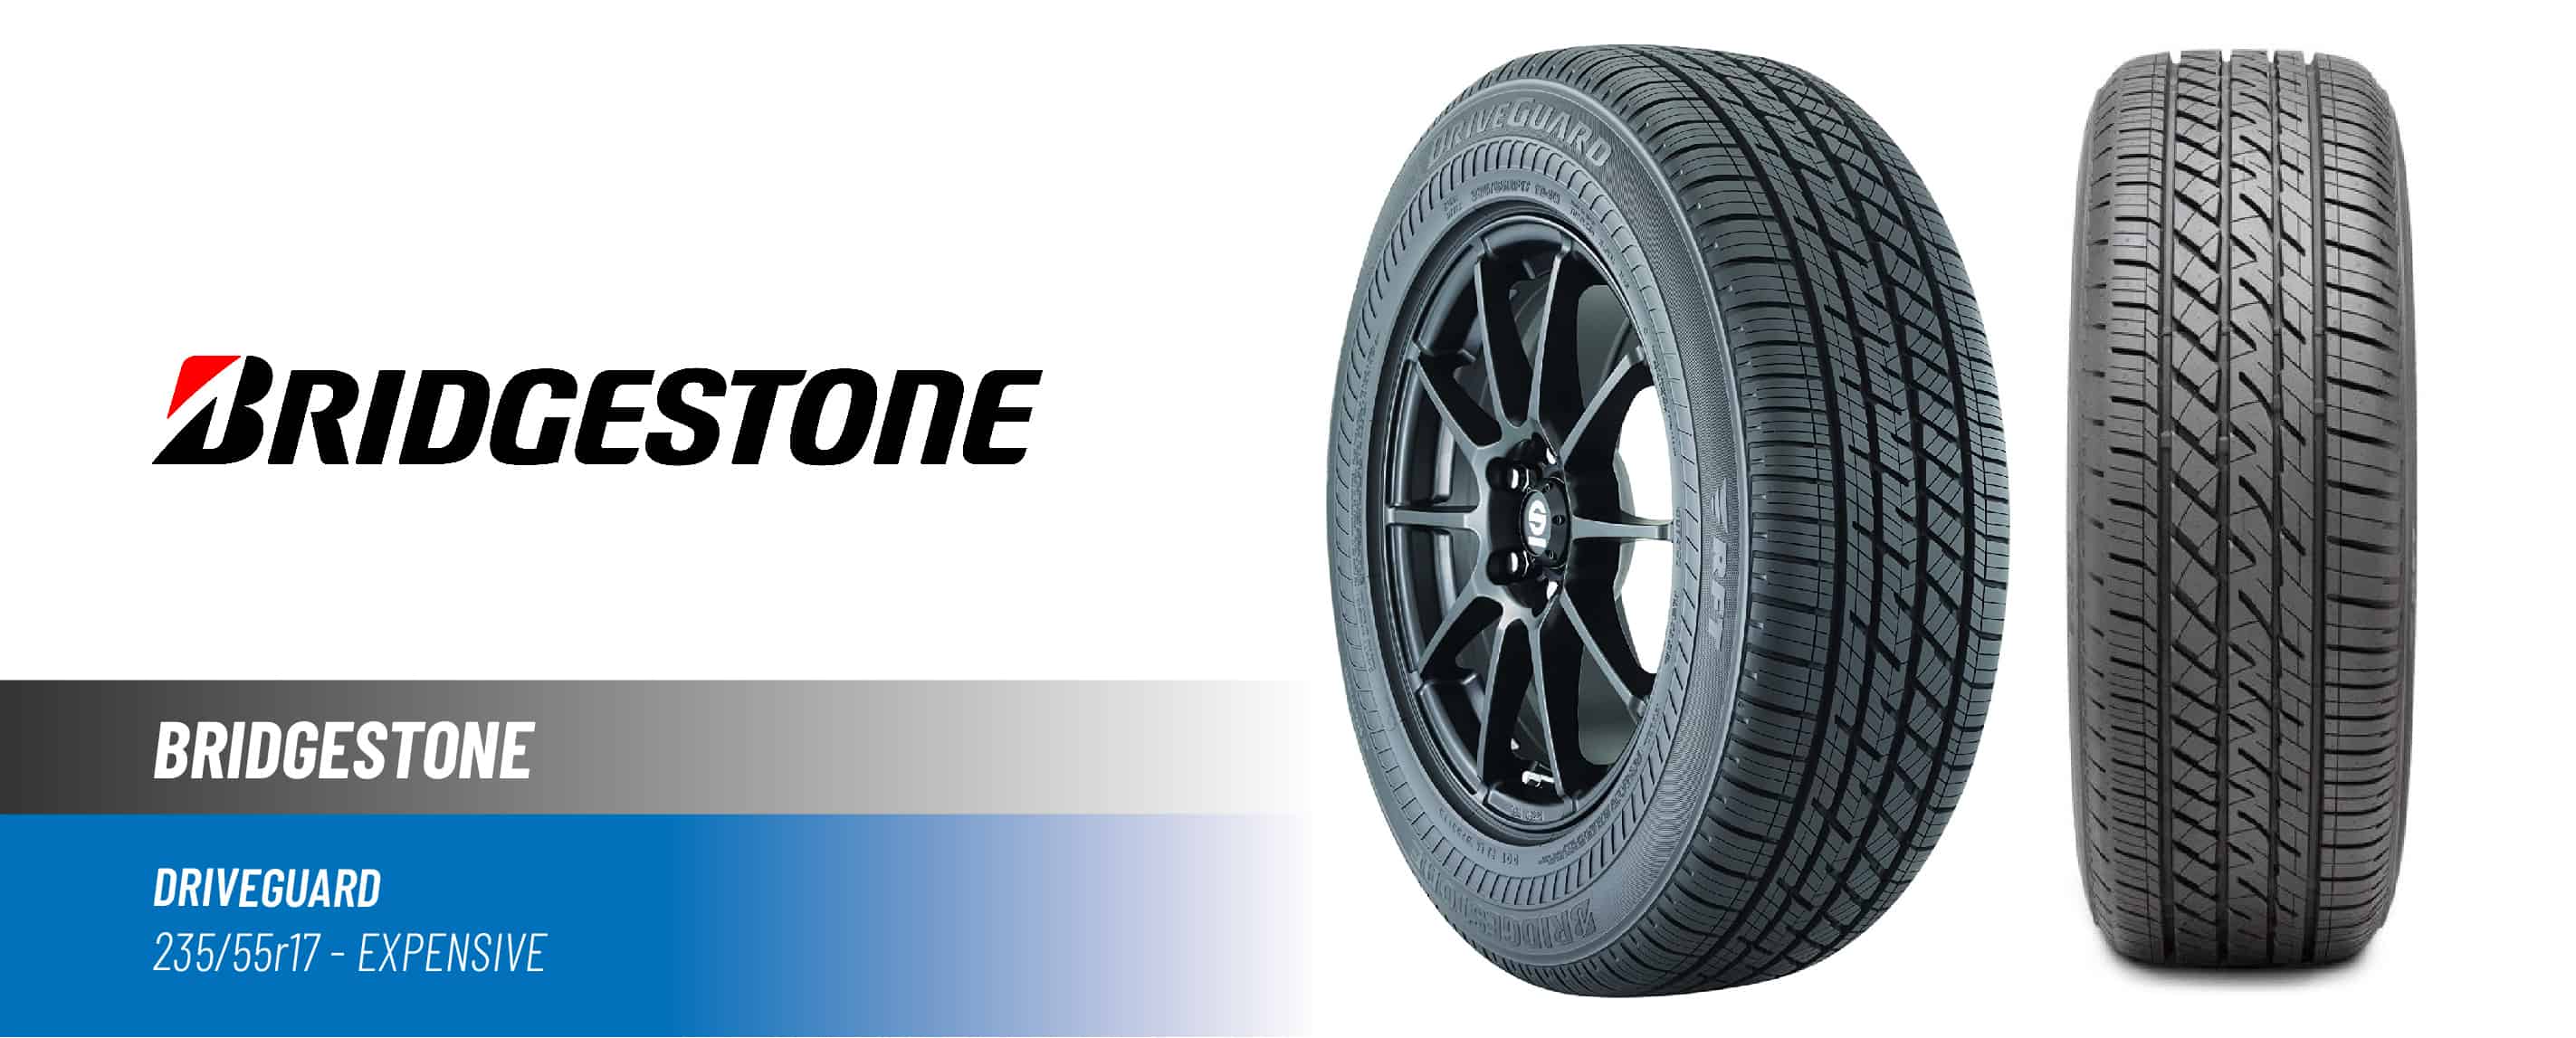 Top#3 High Price: Bridgestone Driveguard – best 235/55 R17